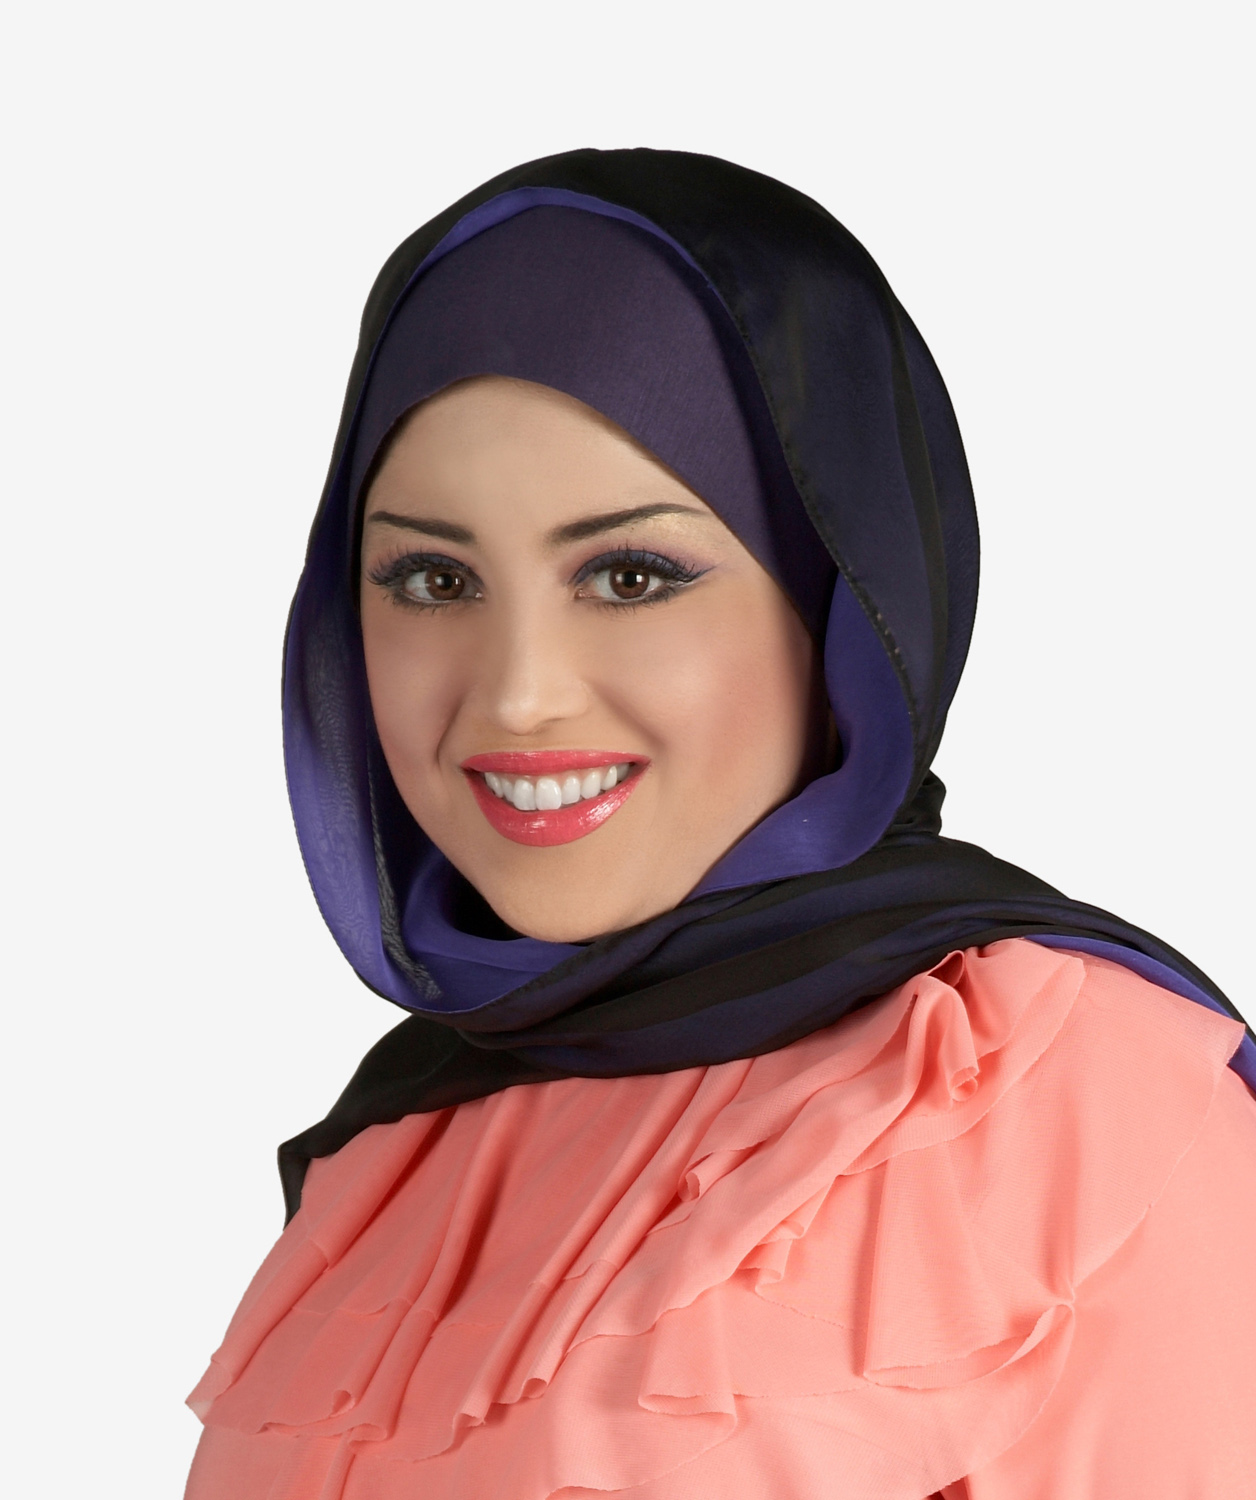 Kuwaiti IT Expert Manar Al-Hashash